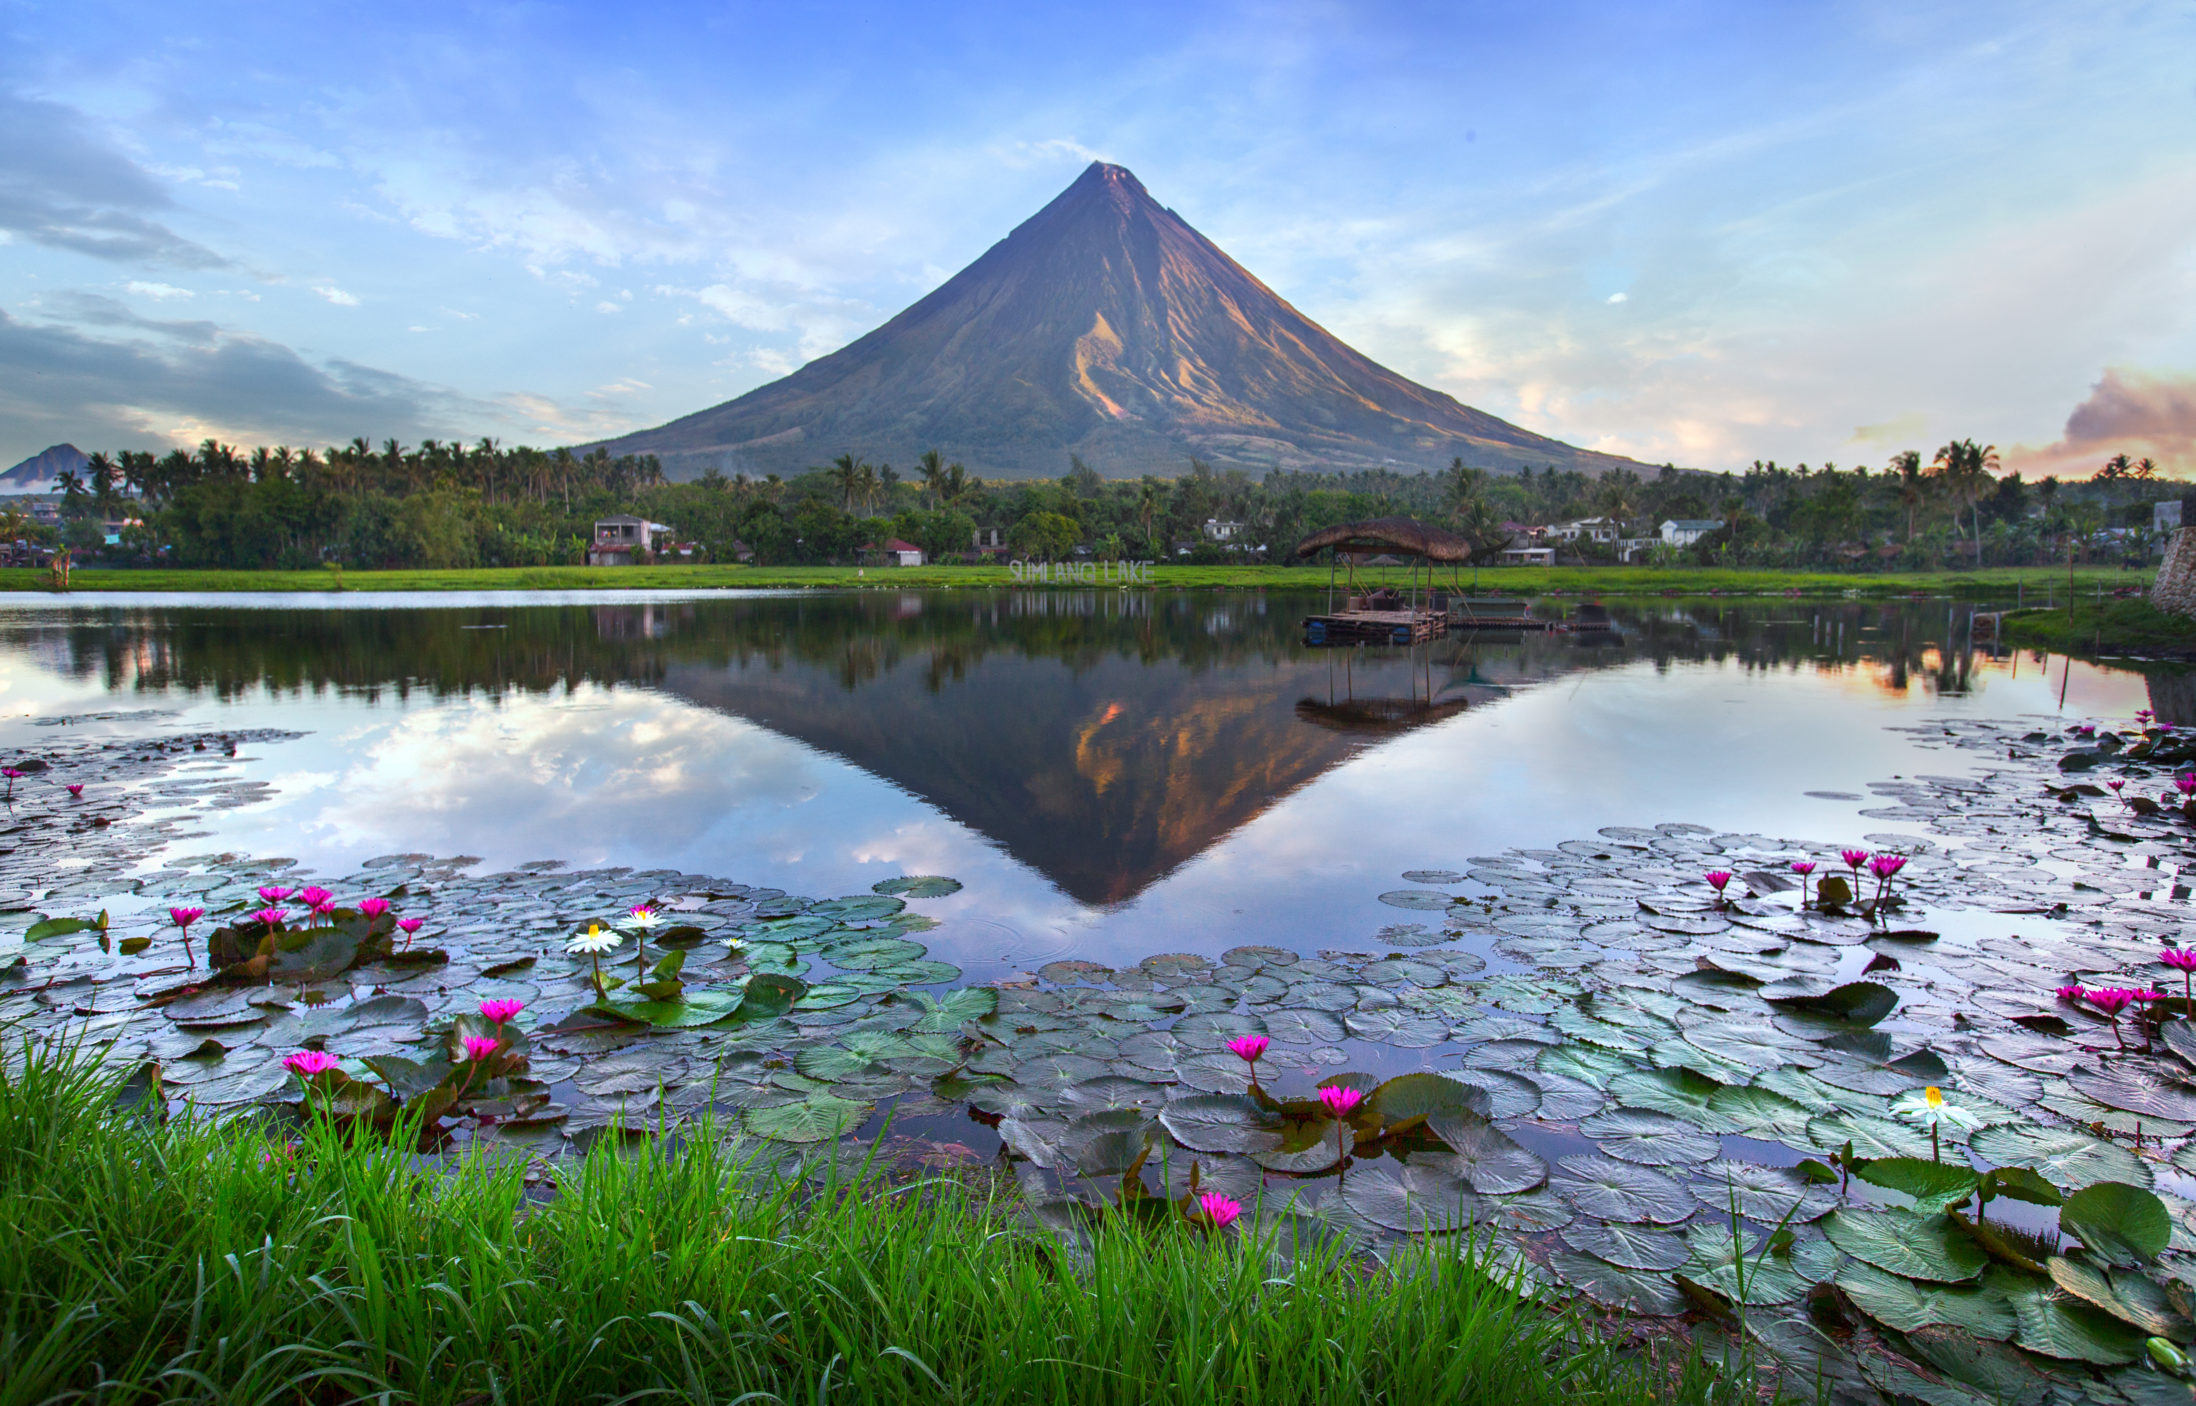 Philippines. [Shutterstock]